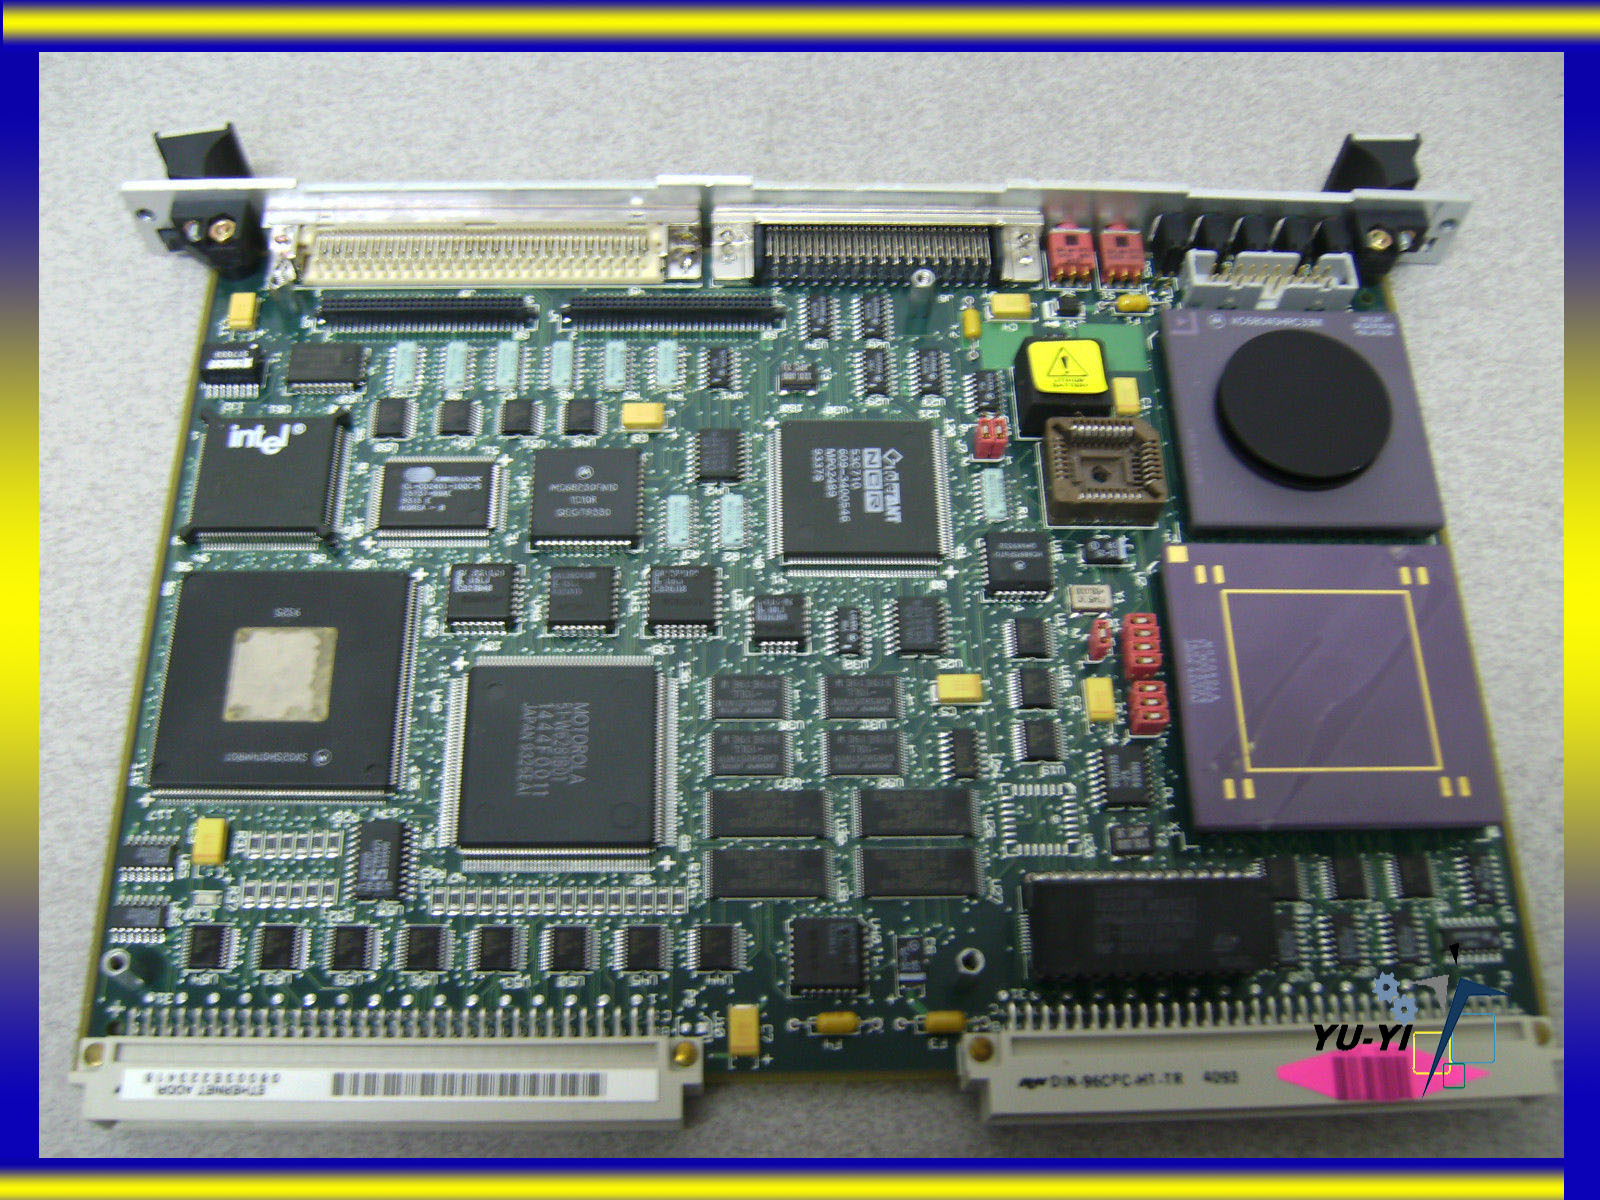 MOTOROLA MVME166-012A 68040 CPU, 33MHZ WITH 8MB ECC MEMORY